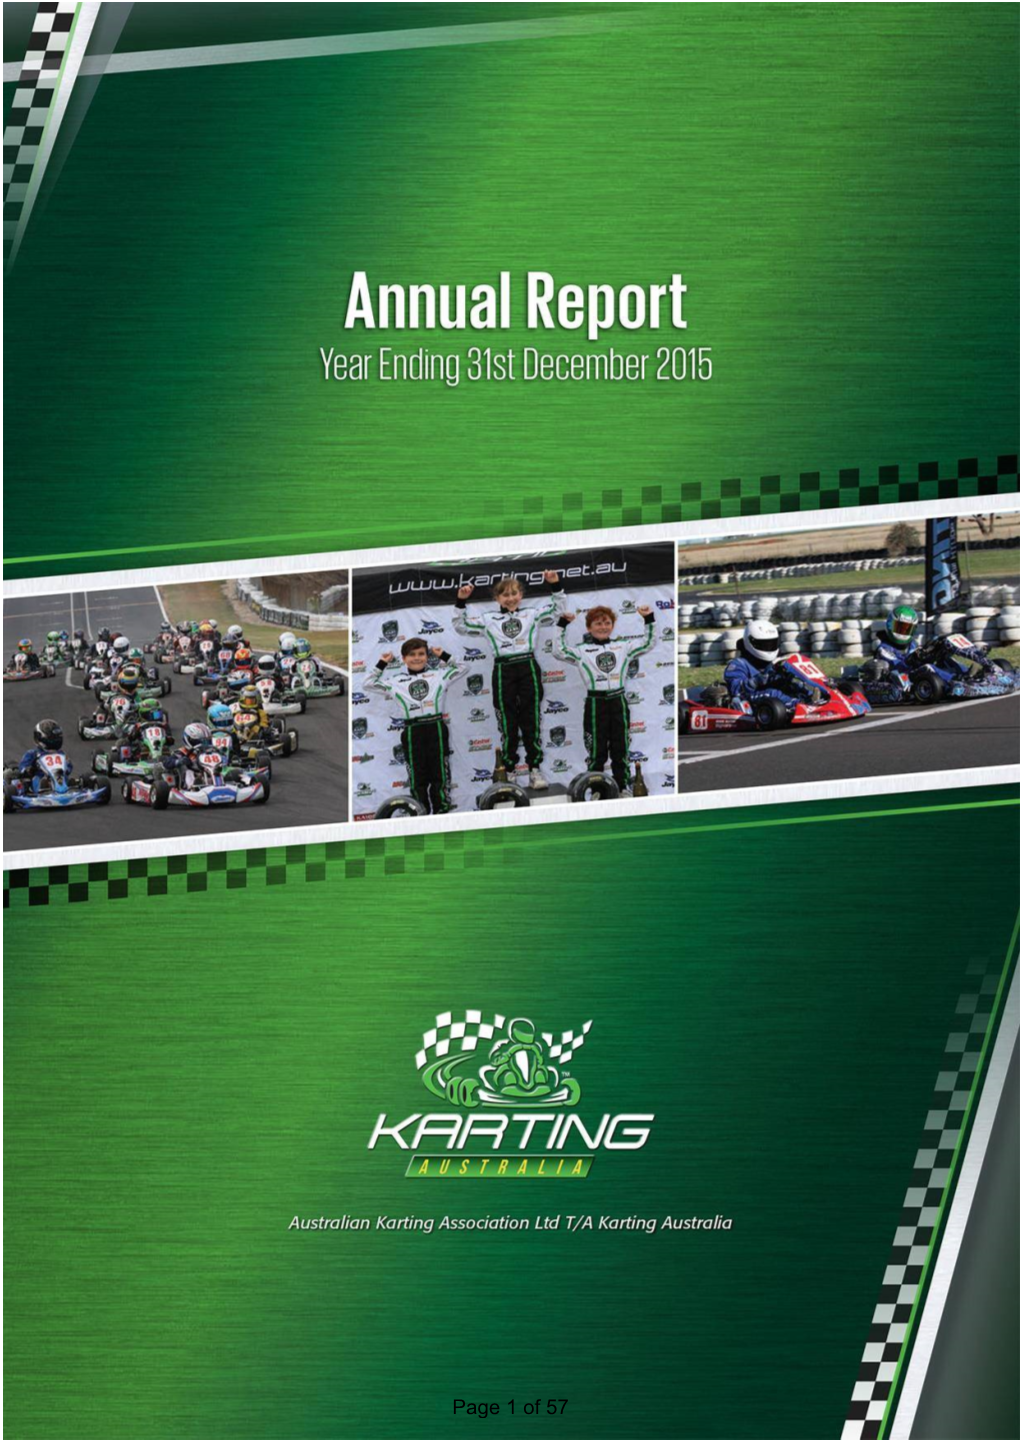 Financial Statements and Audit Report for Australian Karting Association Ltd